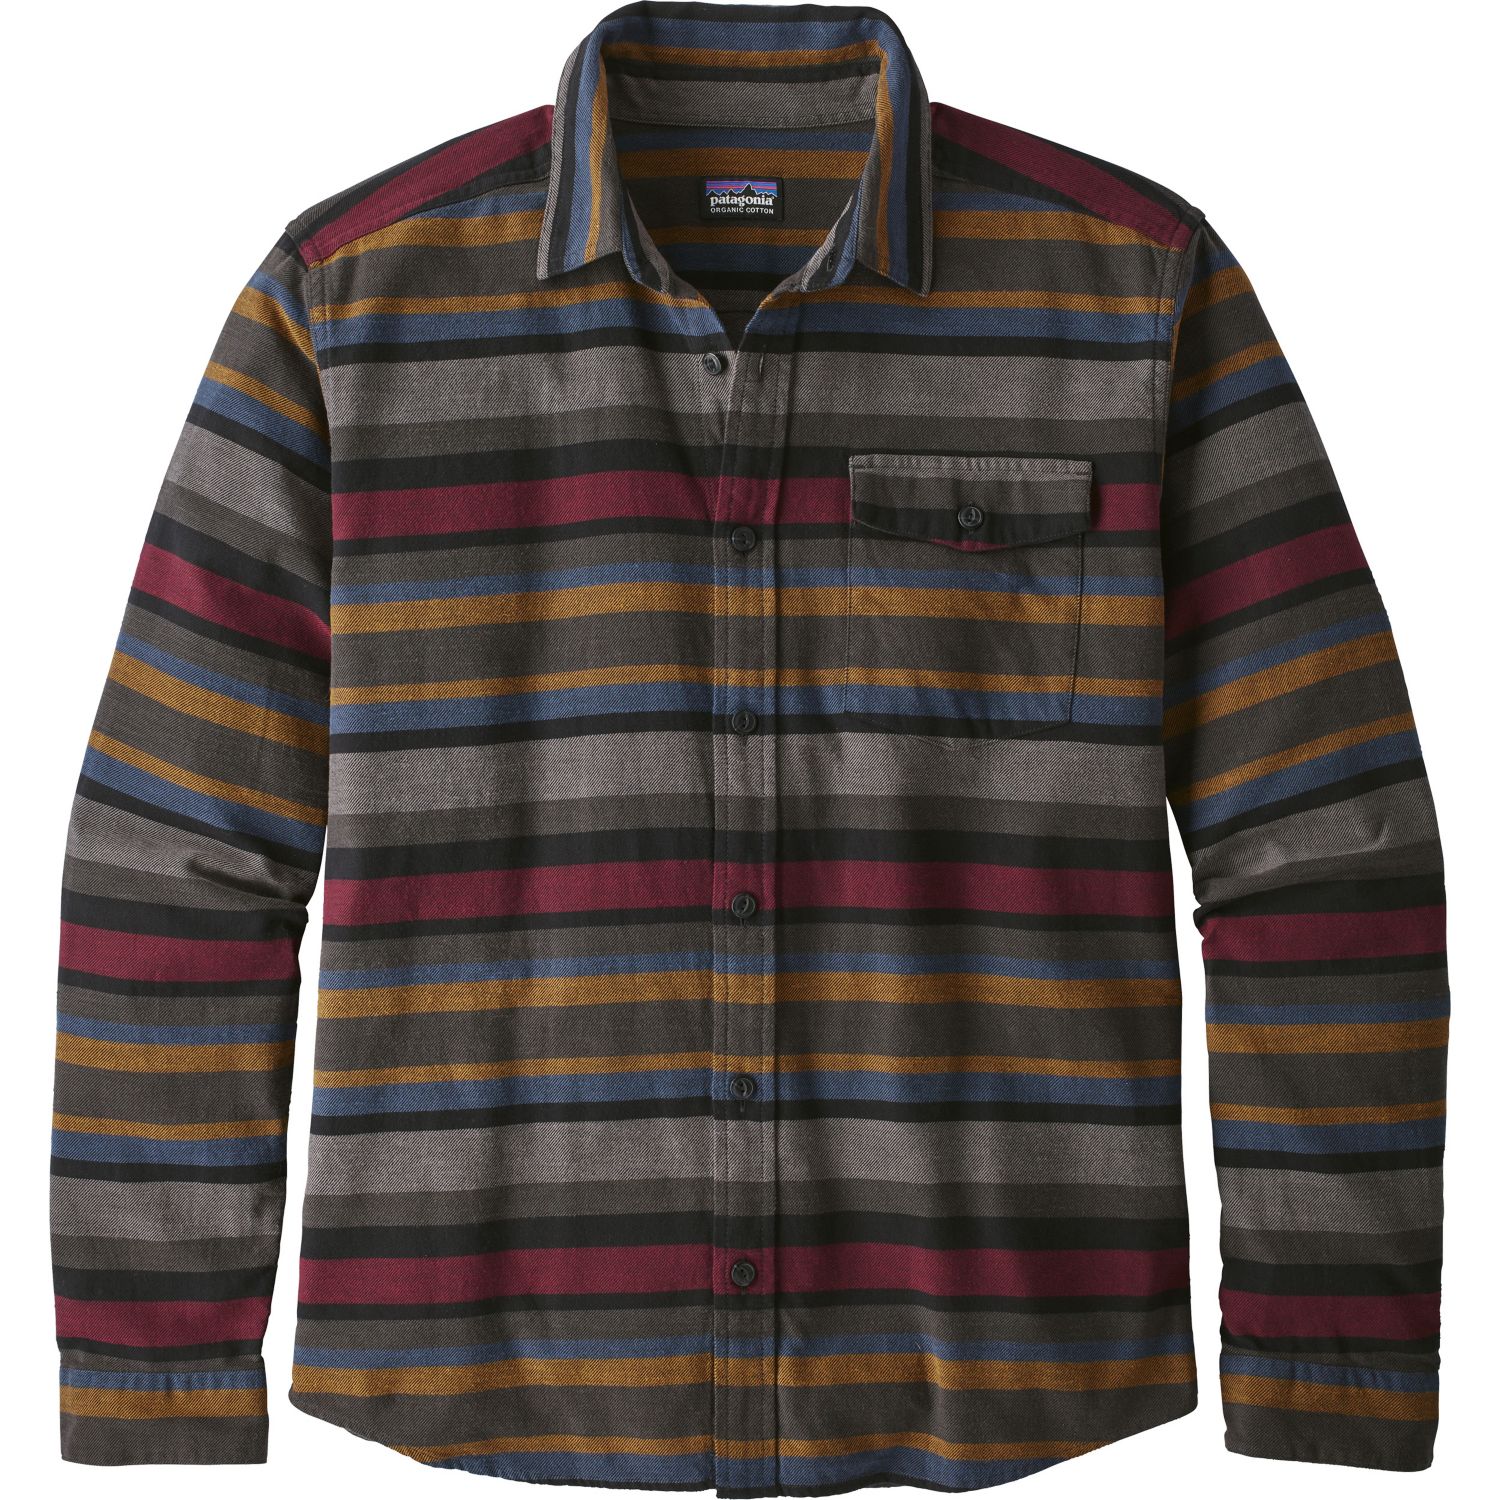 patagonia flannel shirt sale